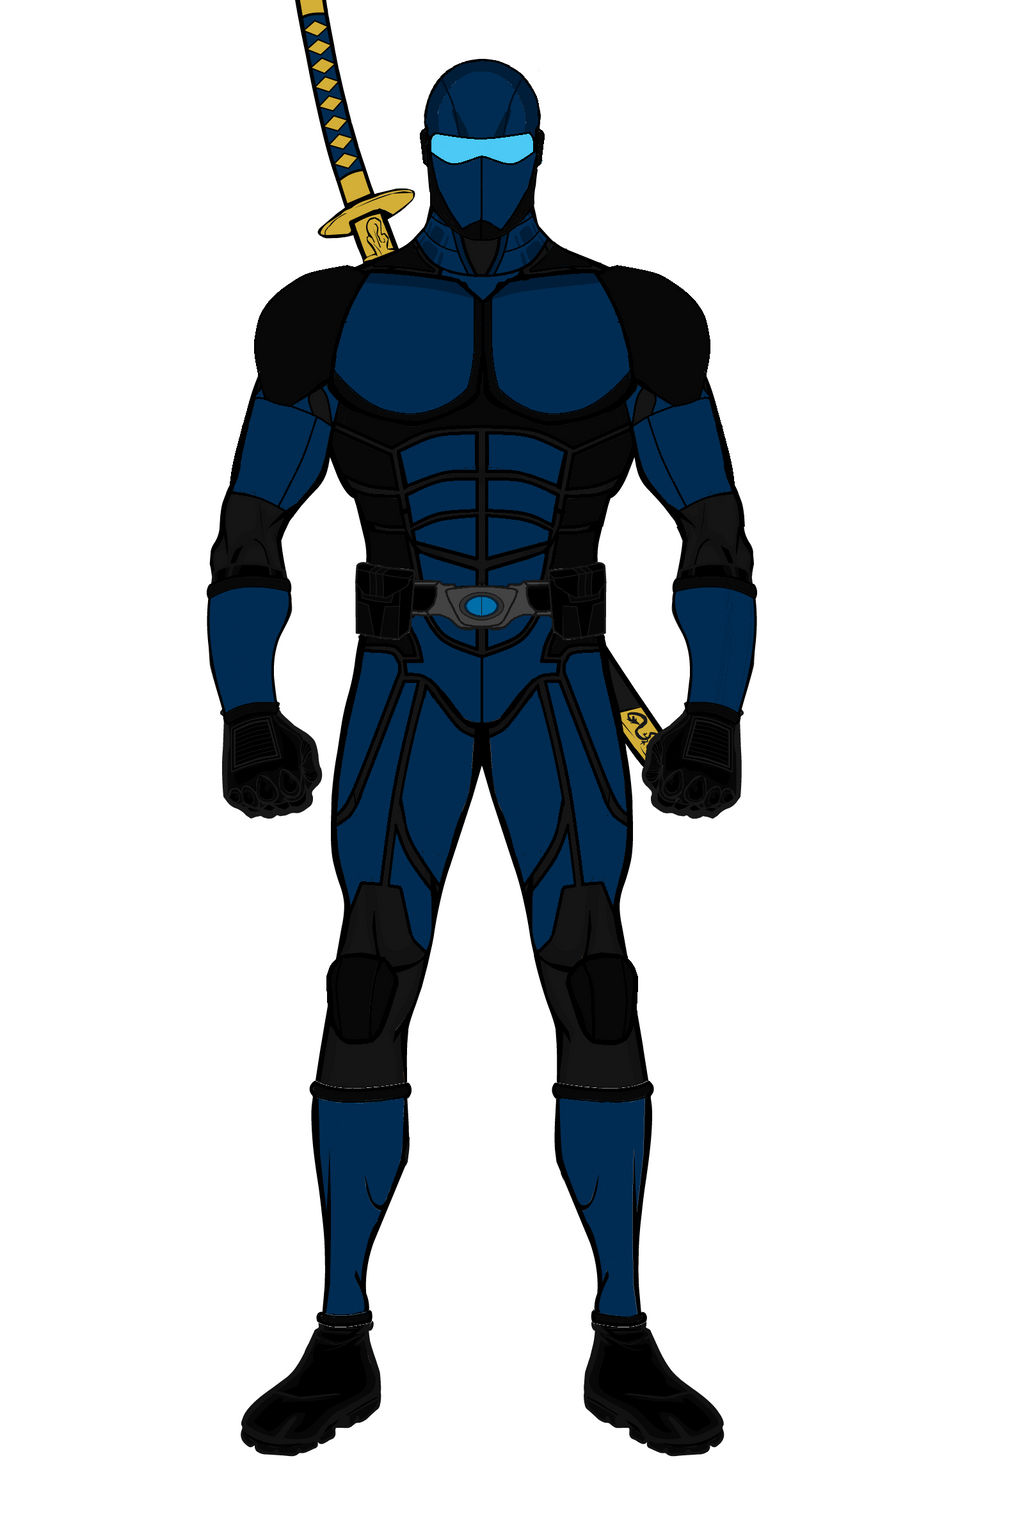 Kataman (Comic)- Kevlar Tactical Suit 3.8 by aniartluke82 on DeviantArt